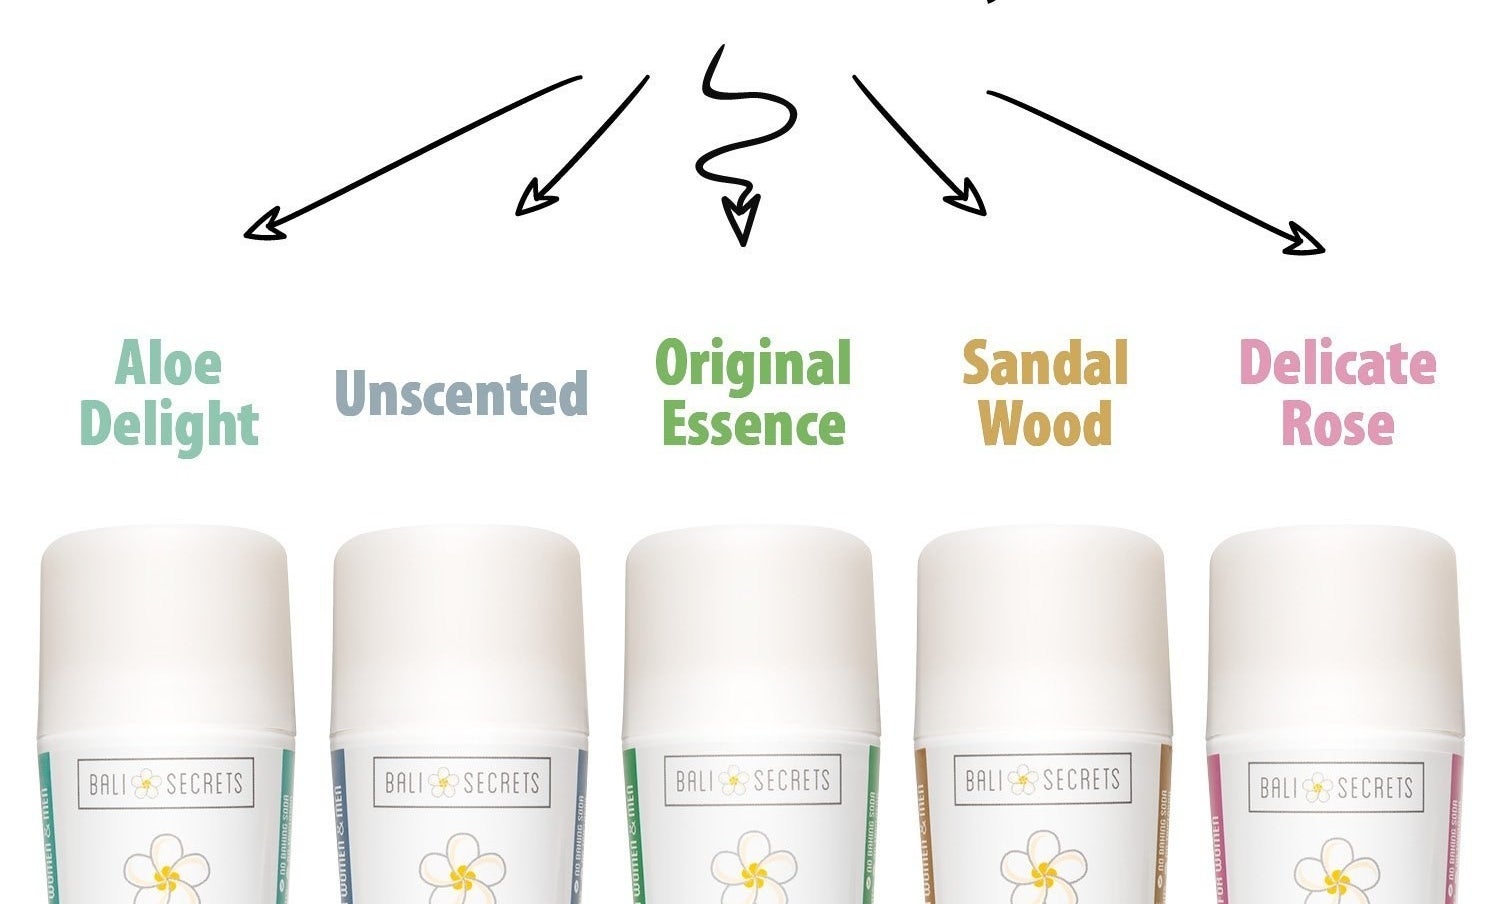 five bottles of deodorant in different scents